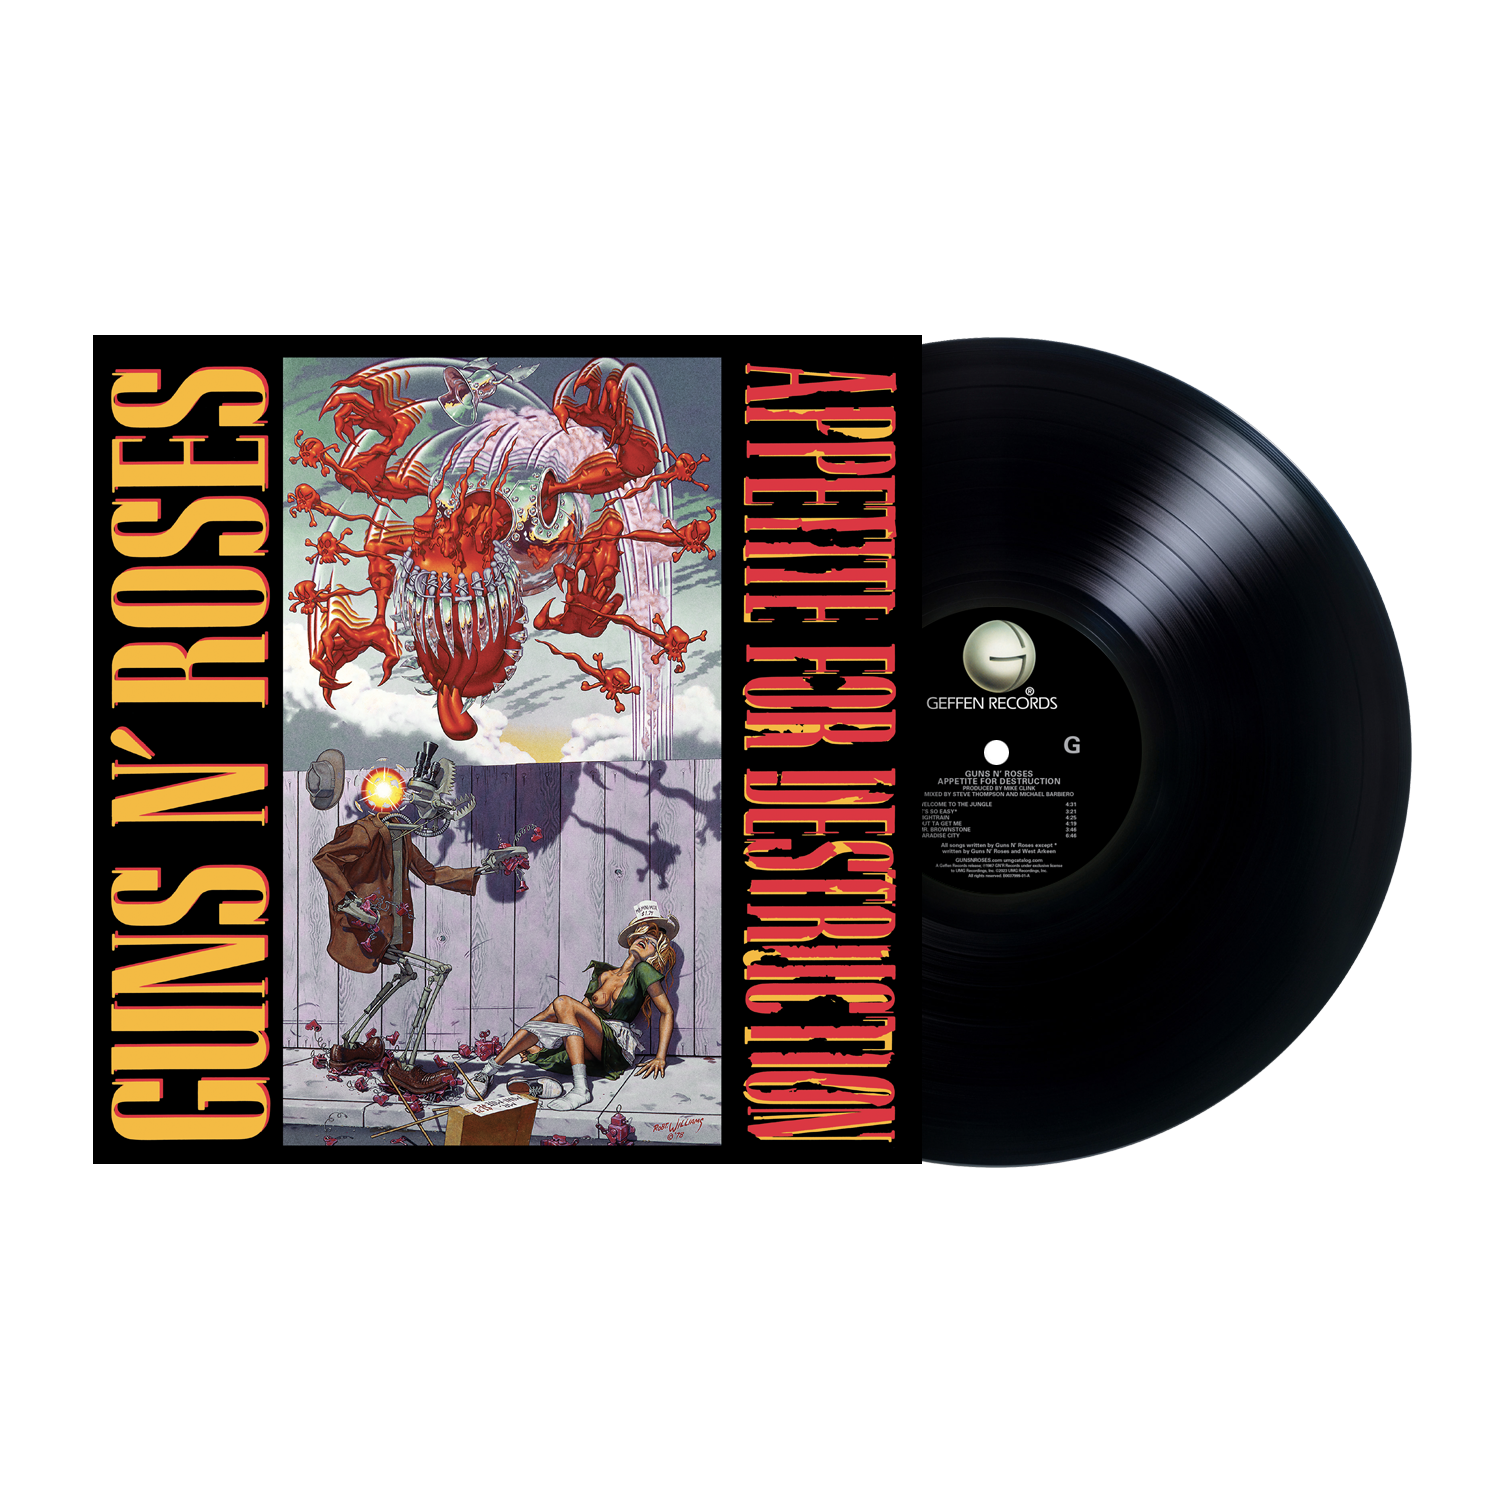 Guns N' Roses - Appetite For Destruction. Limited Edition LP 